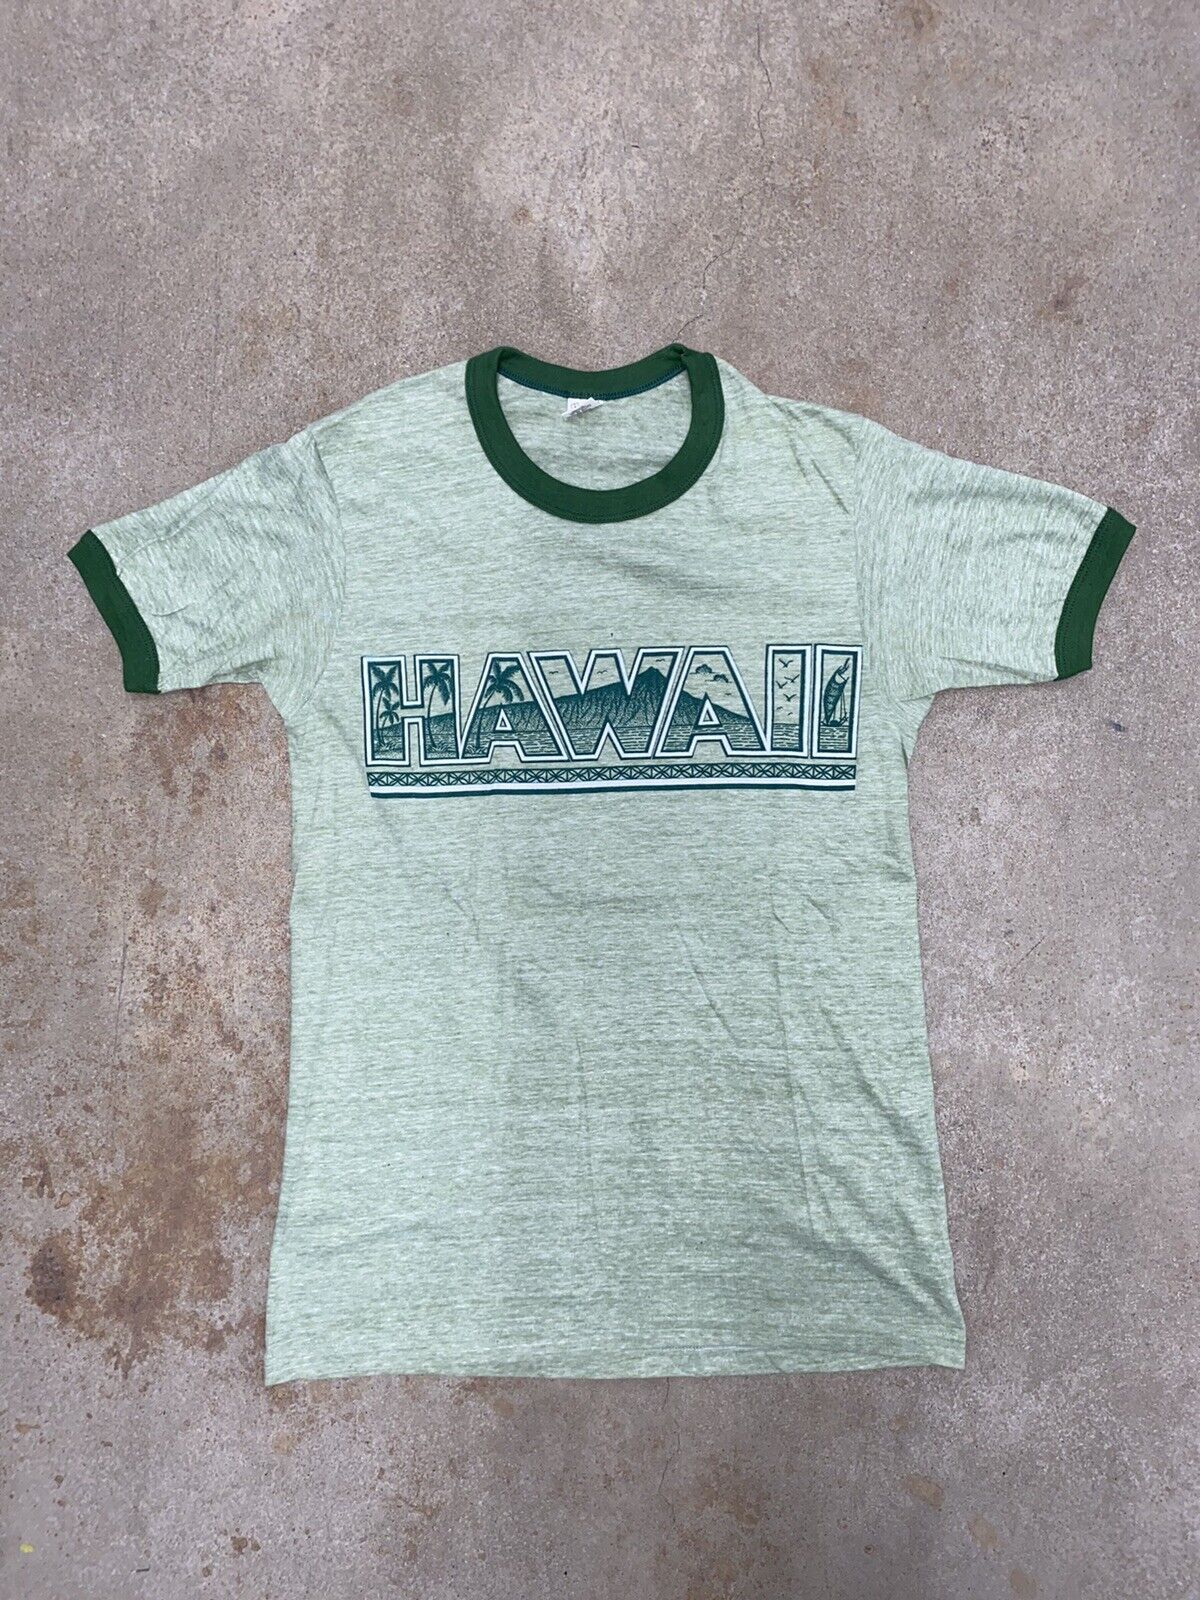 Vintage 70s Hawaii Hanes Green Ringer T Shirt Sur… - image 2